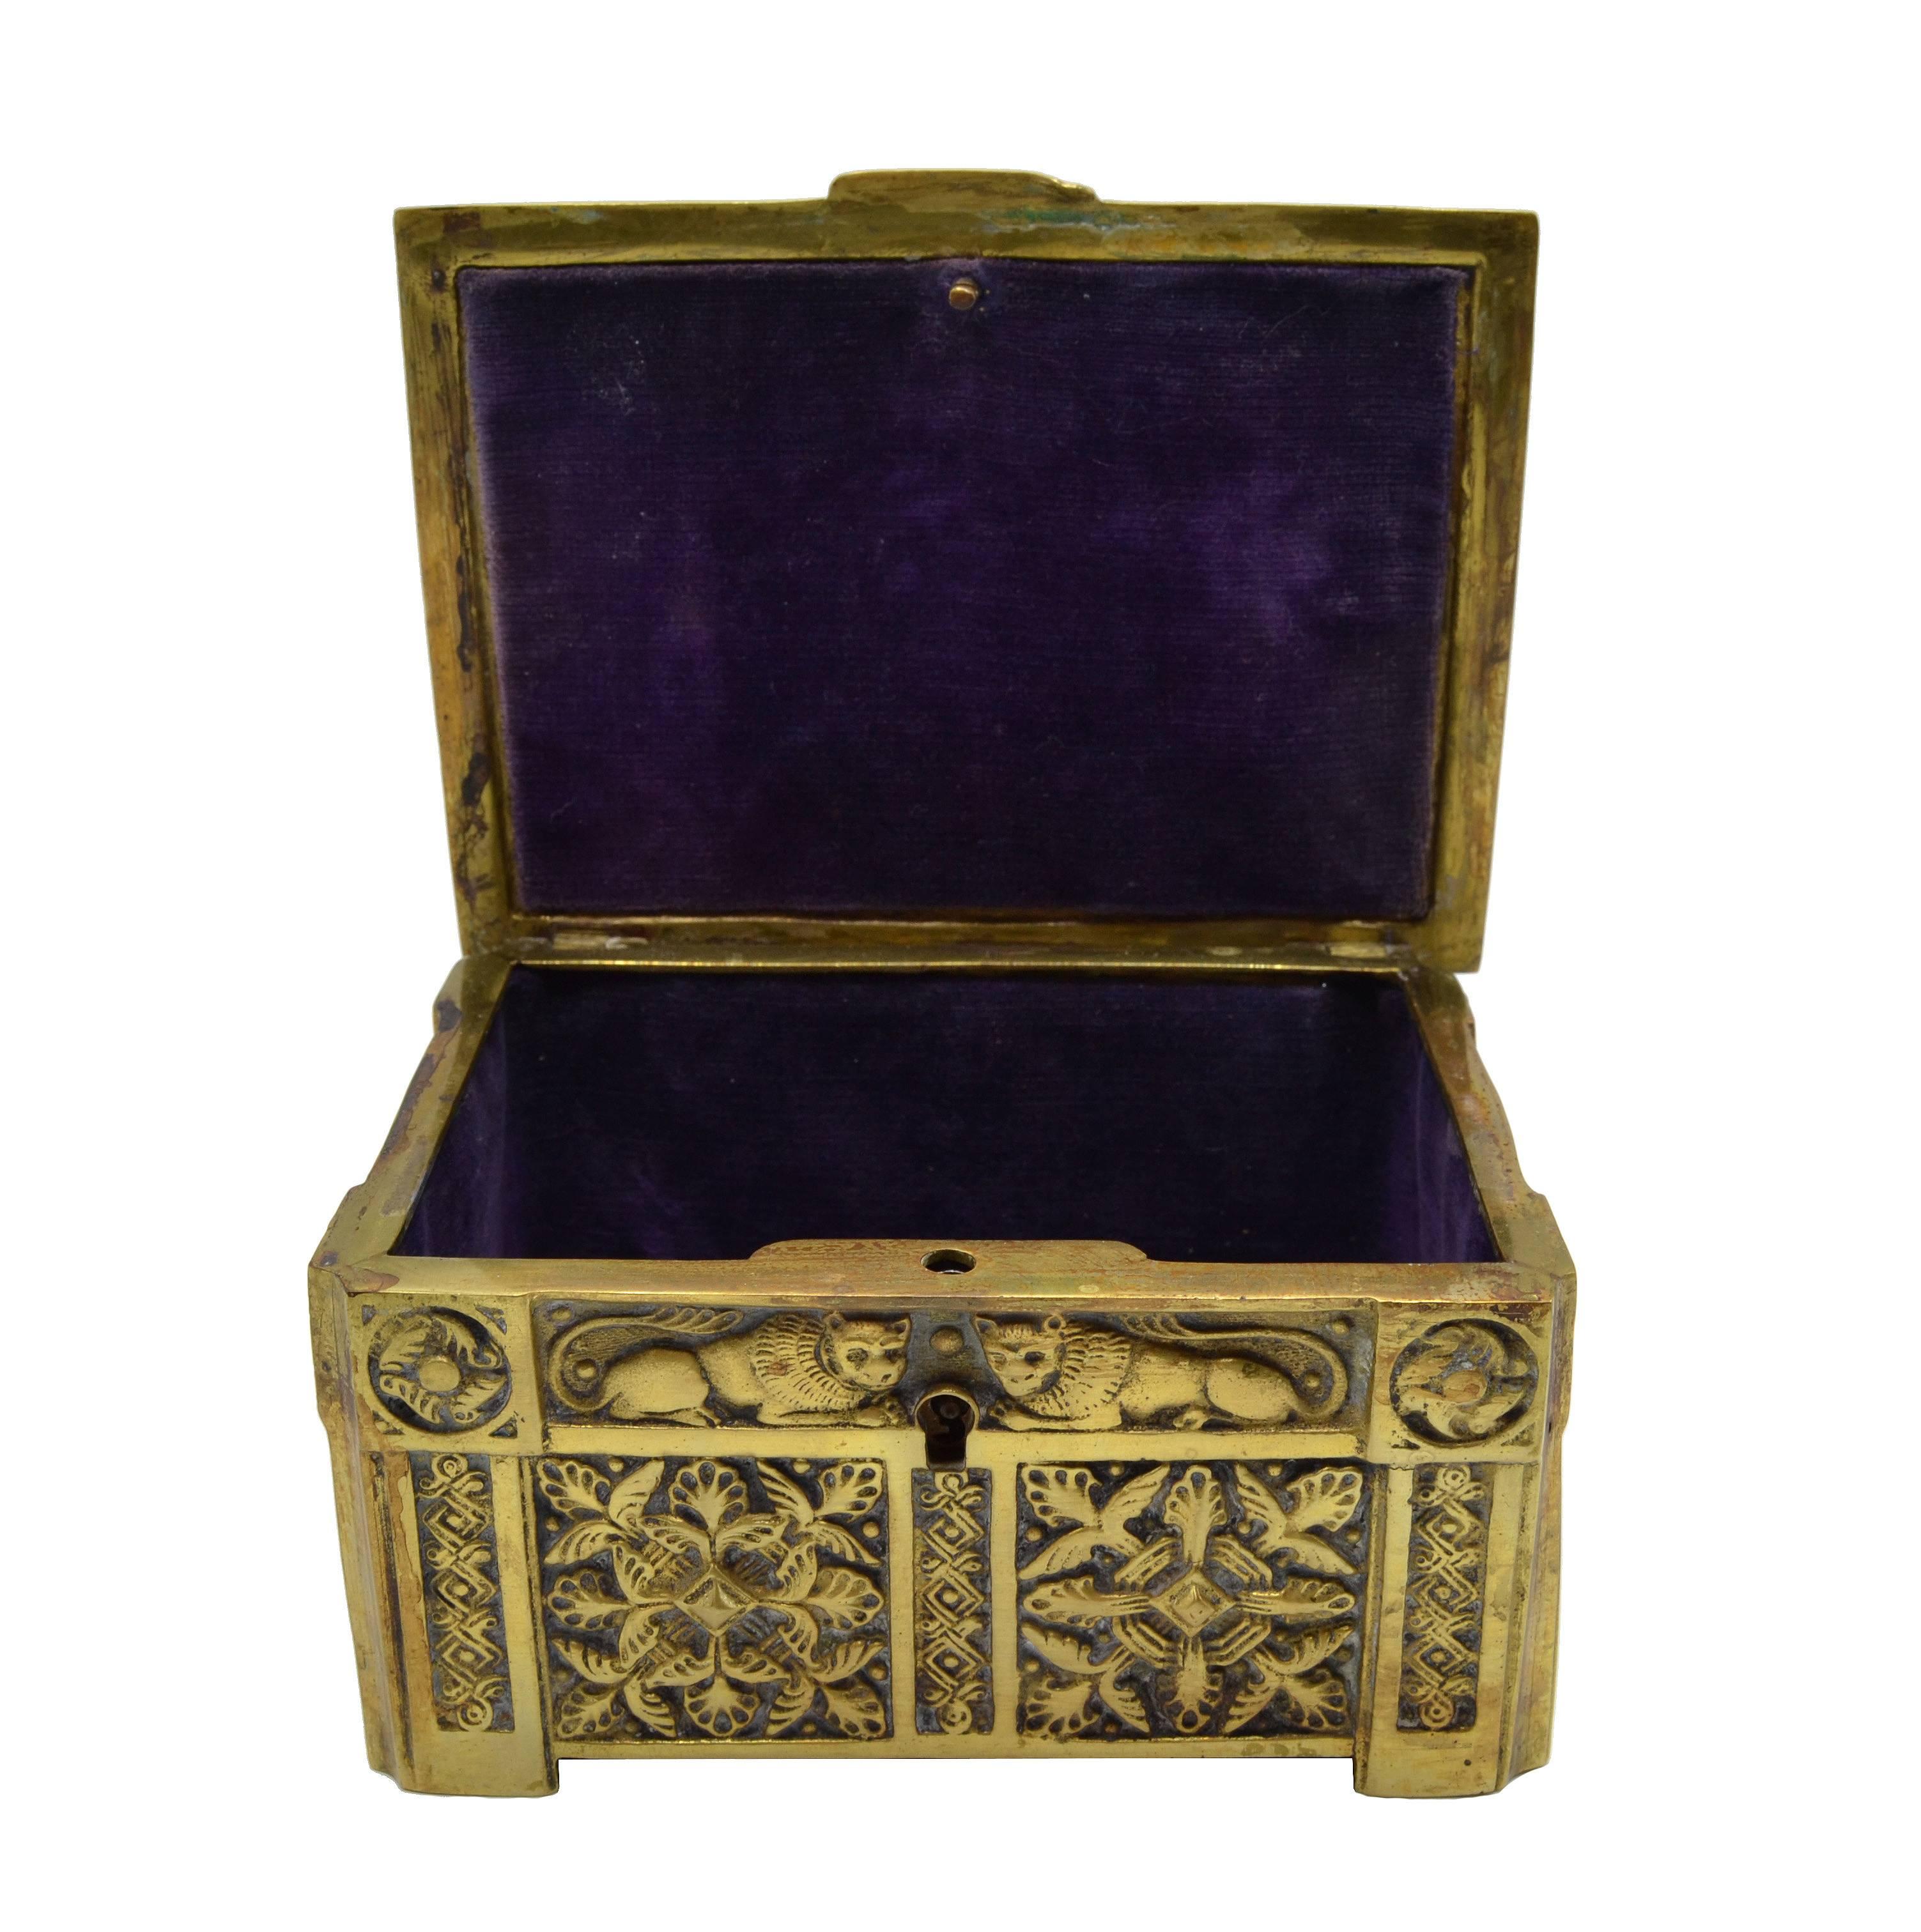 ffxi bronze box